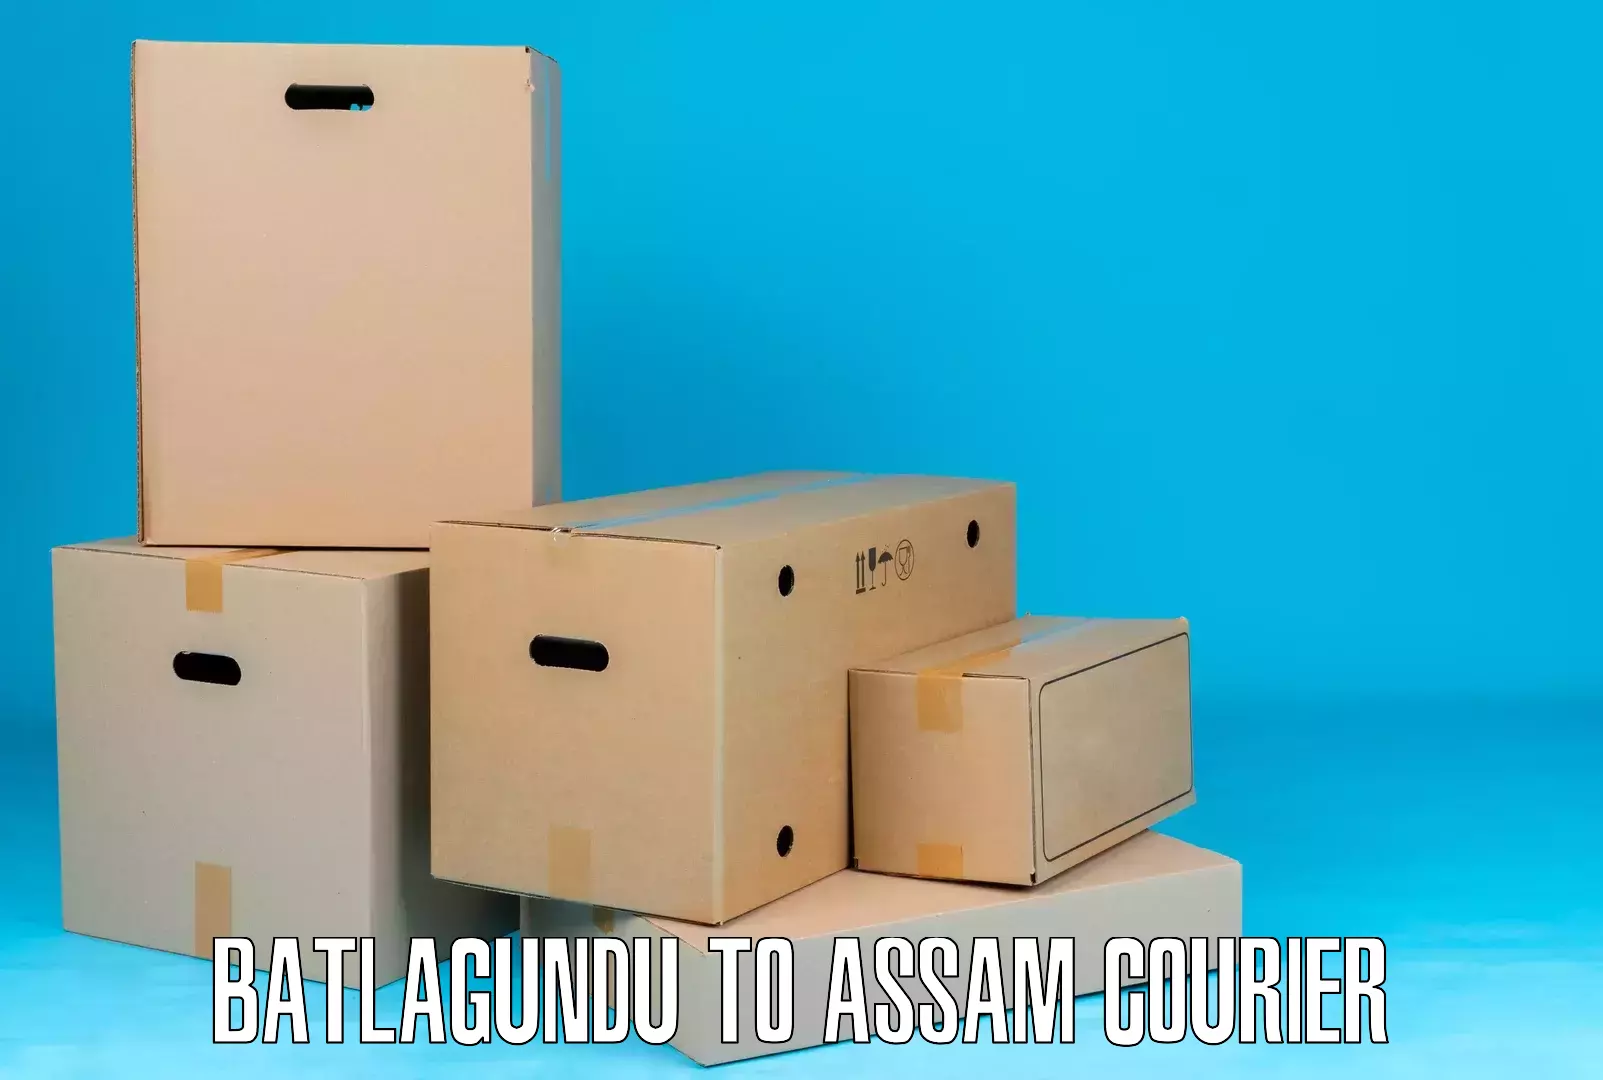 Courier service comparison in Batlagundu to Assam